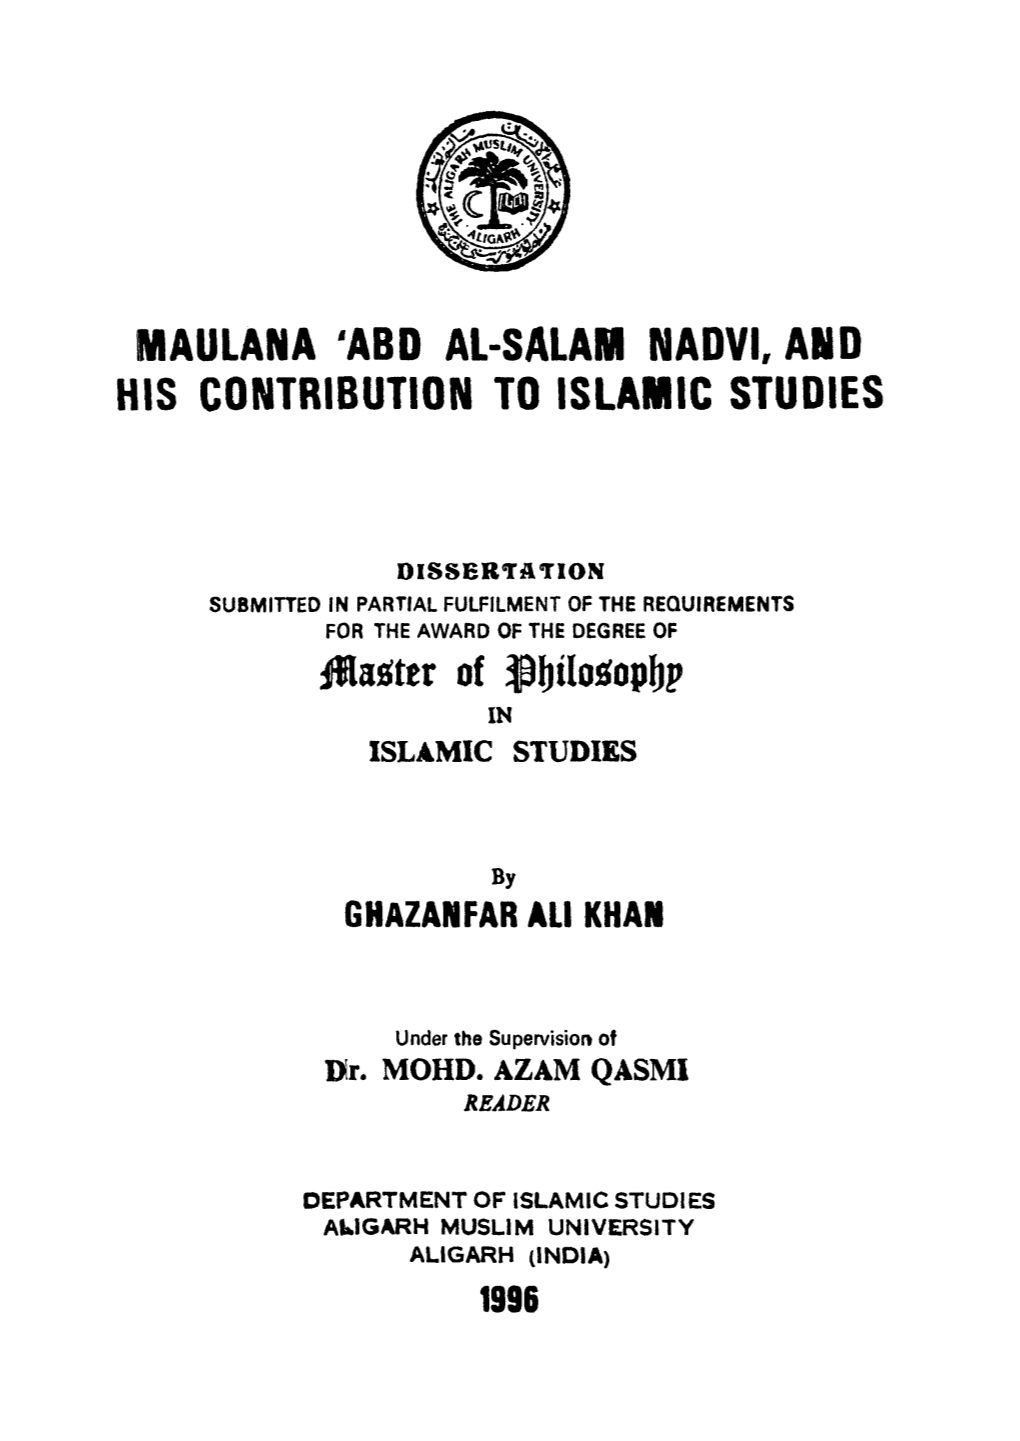 MAULANA ABD AL-SALAM Nadvi, and HIS CONTRIBUTION to ISLAMIC STUDIES